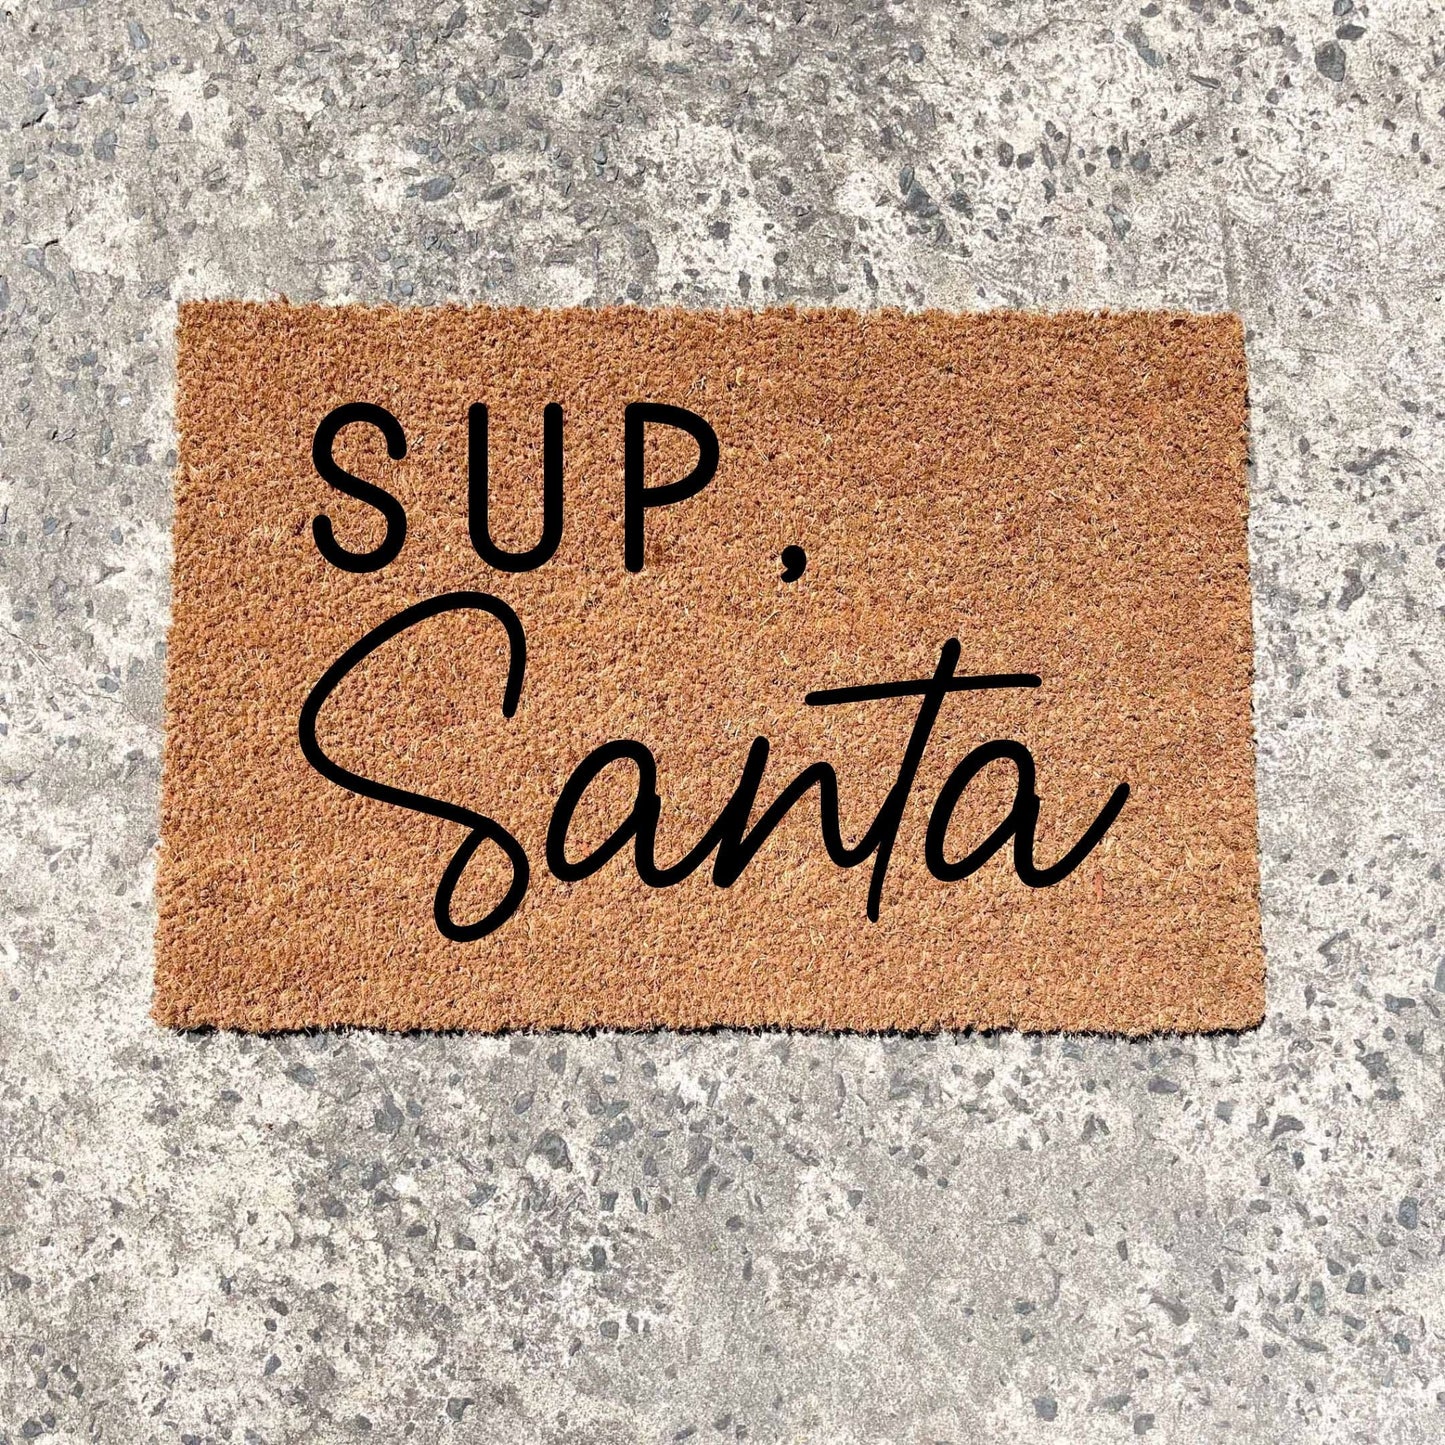 Sup, Santa doormat, Christmas doormat, Seasonal Doormat, Holidays Doormat